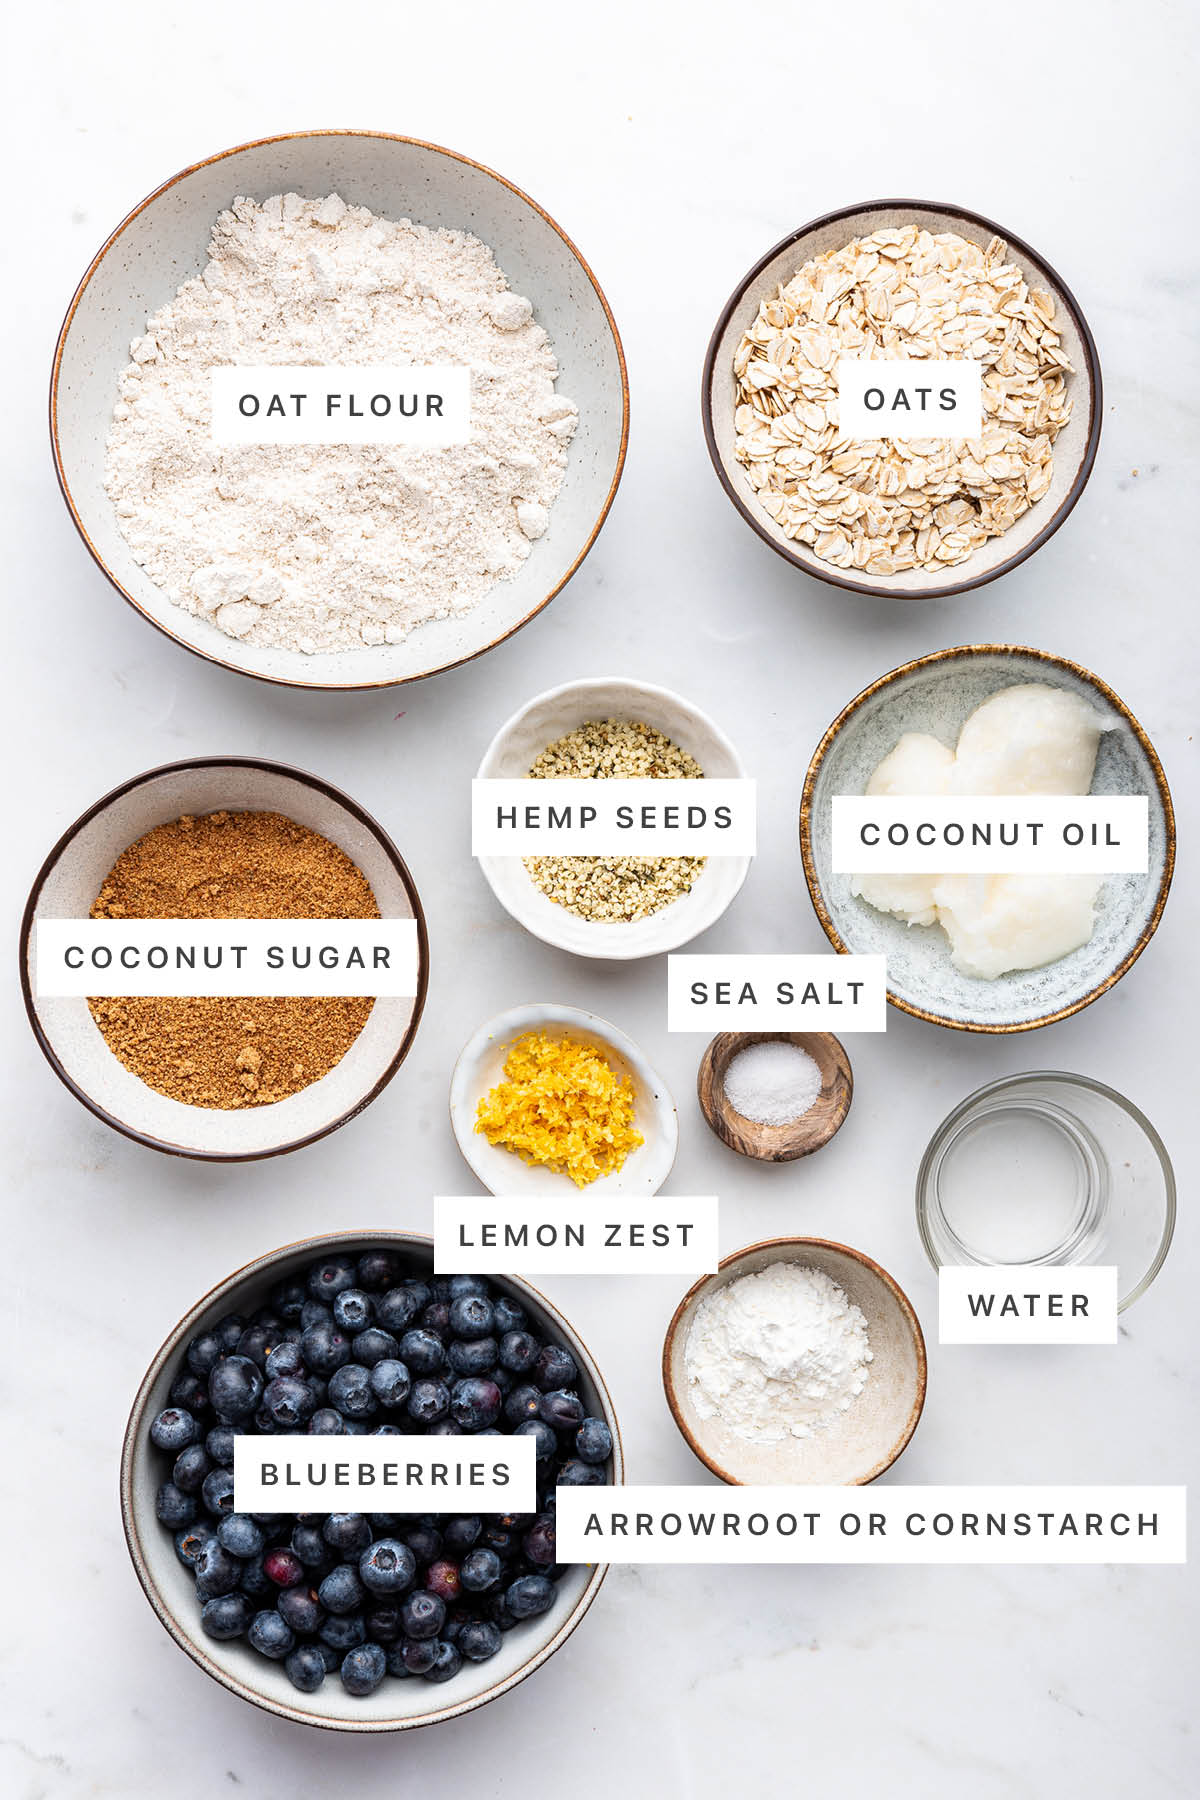 Ingredients measured out to make Healthy Blueberry Crumble Bars: oat flour, oats, hemp seeds, coconut oil, coconut sugar, sea salt, lemon zest, water, blueberries and arrowroot powder.